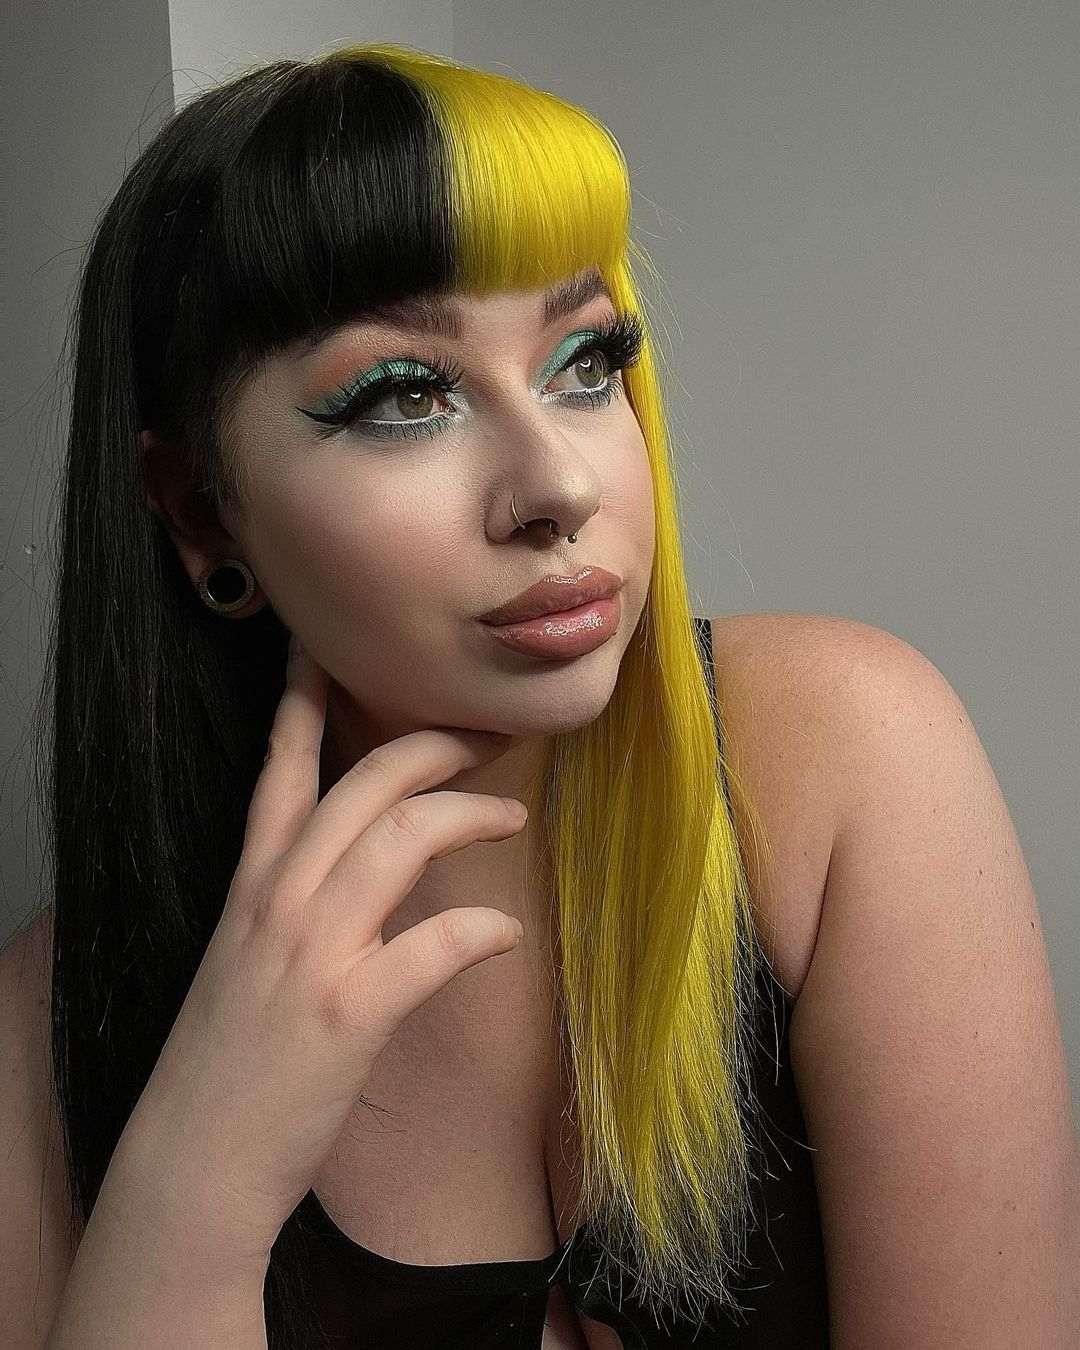 Black and yellow split hair